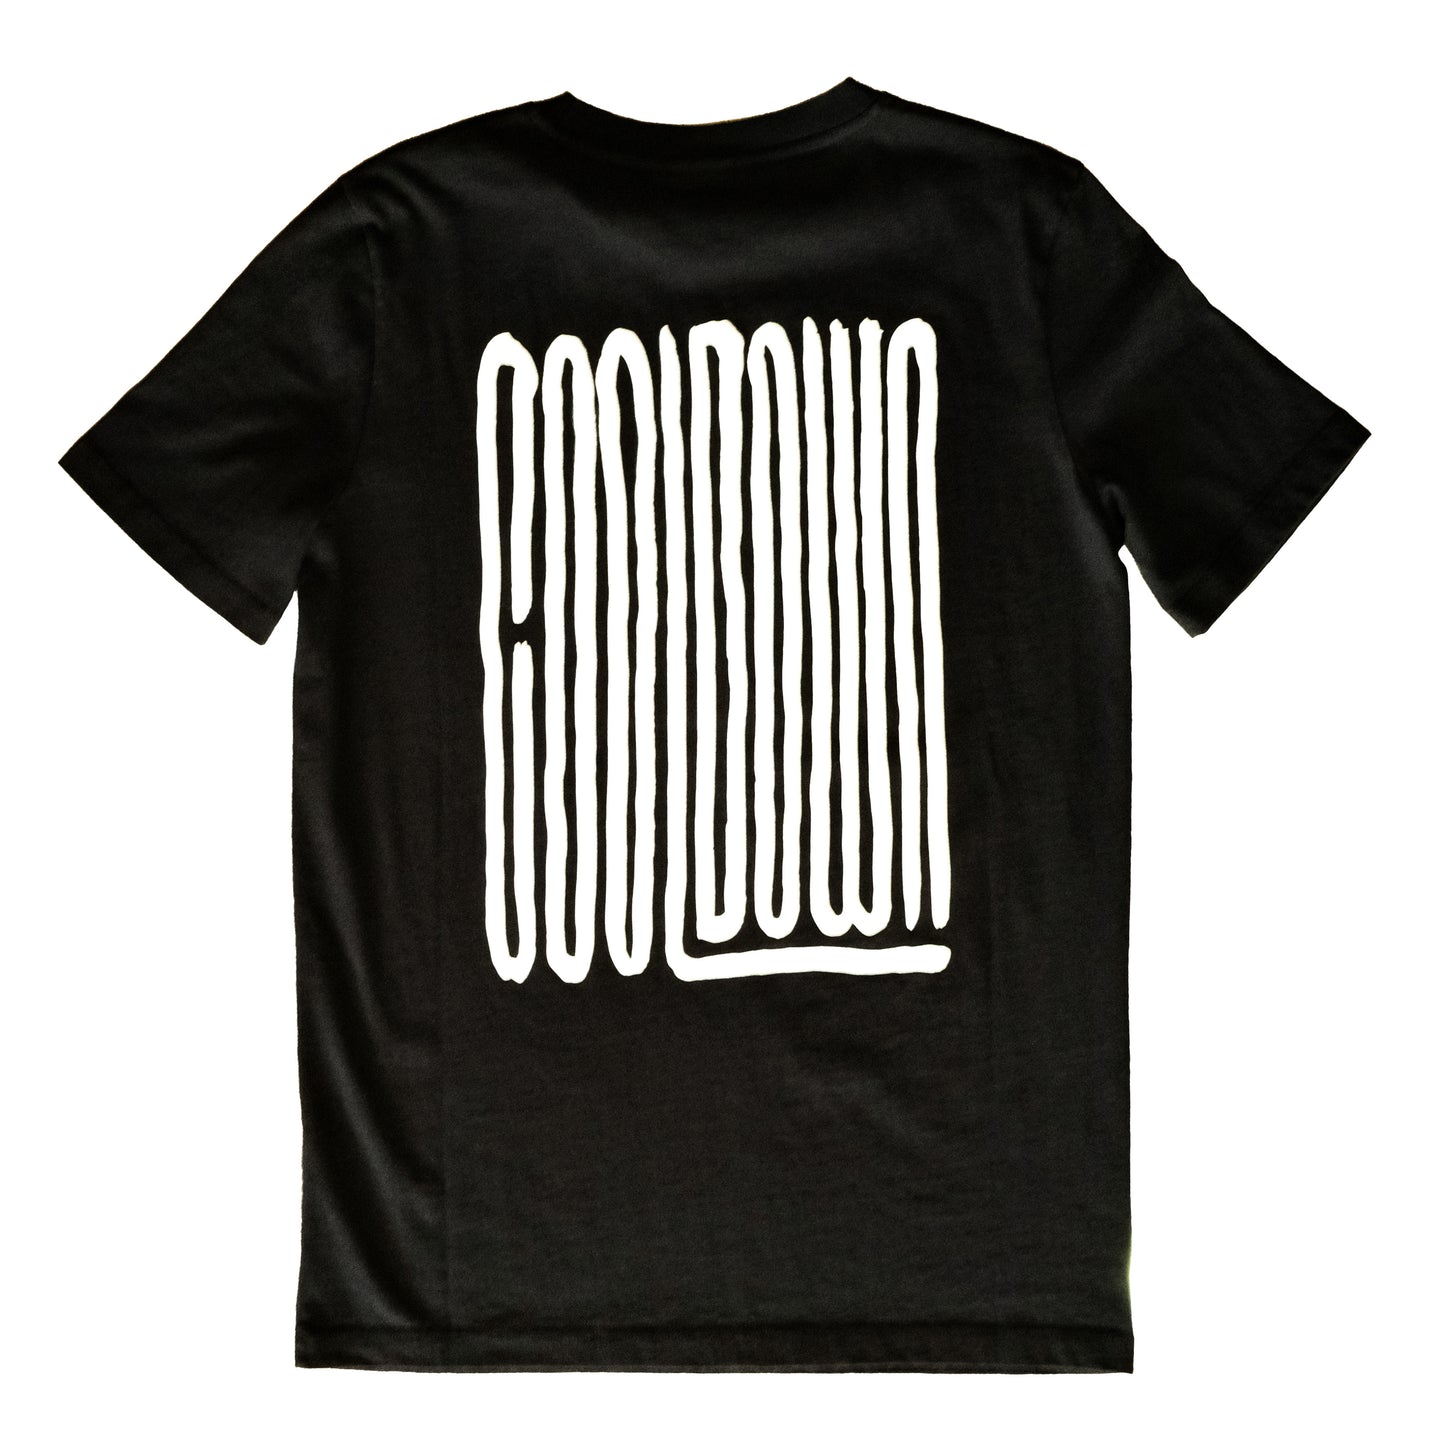 T-Shirt CoolDown Black